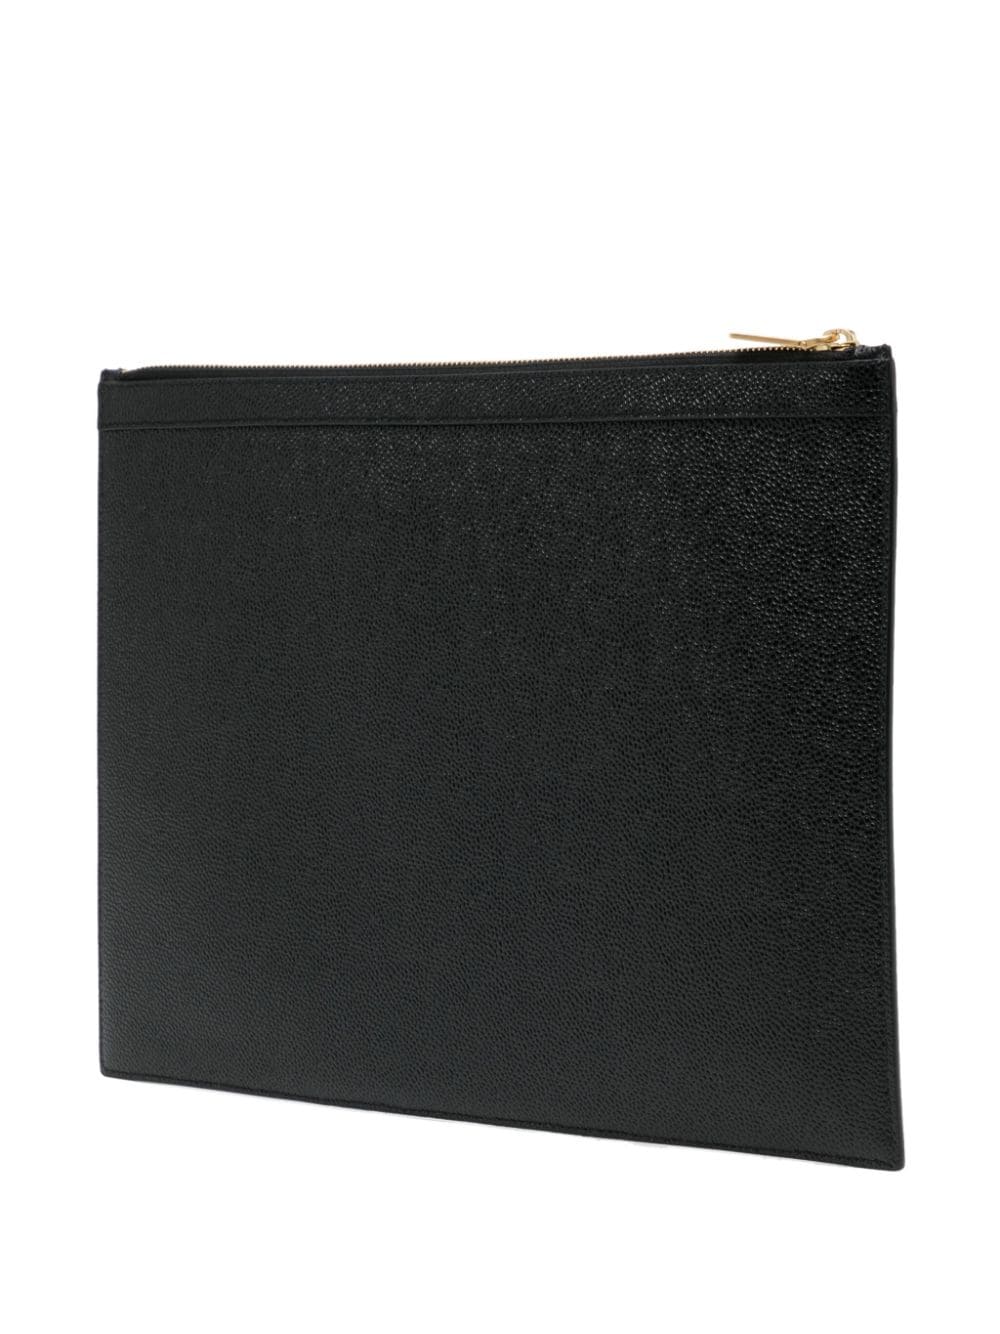 Medium Document Holder W/ Gros Grain 4 Bar In Pebble Grain Leather Black